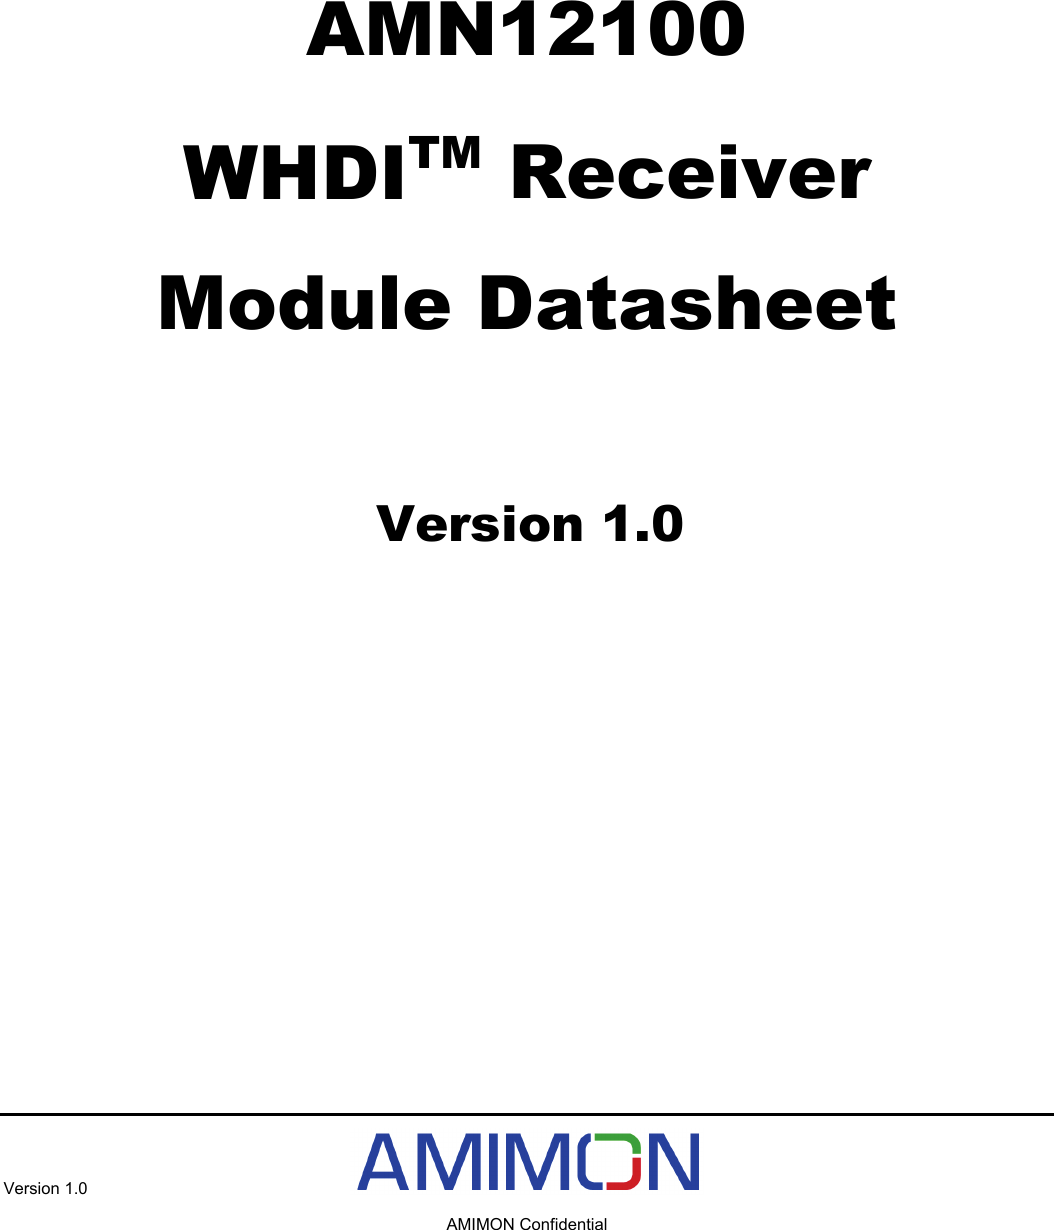   AMN12100 WHDITM Receiver  Module Datasheet   Version 1.0  Version 1.0     AMIMON Confidential   